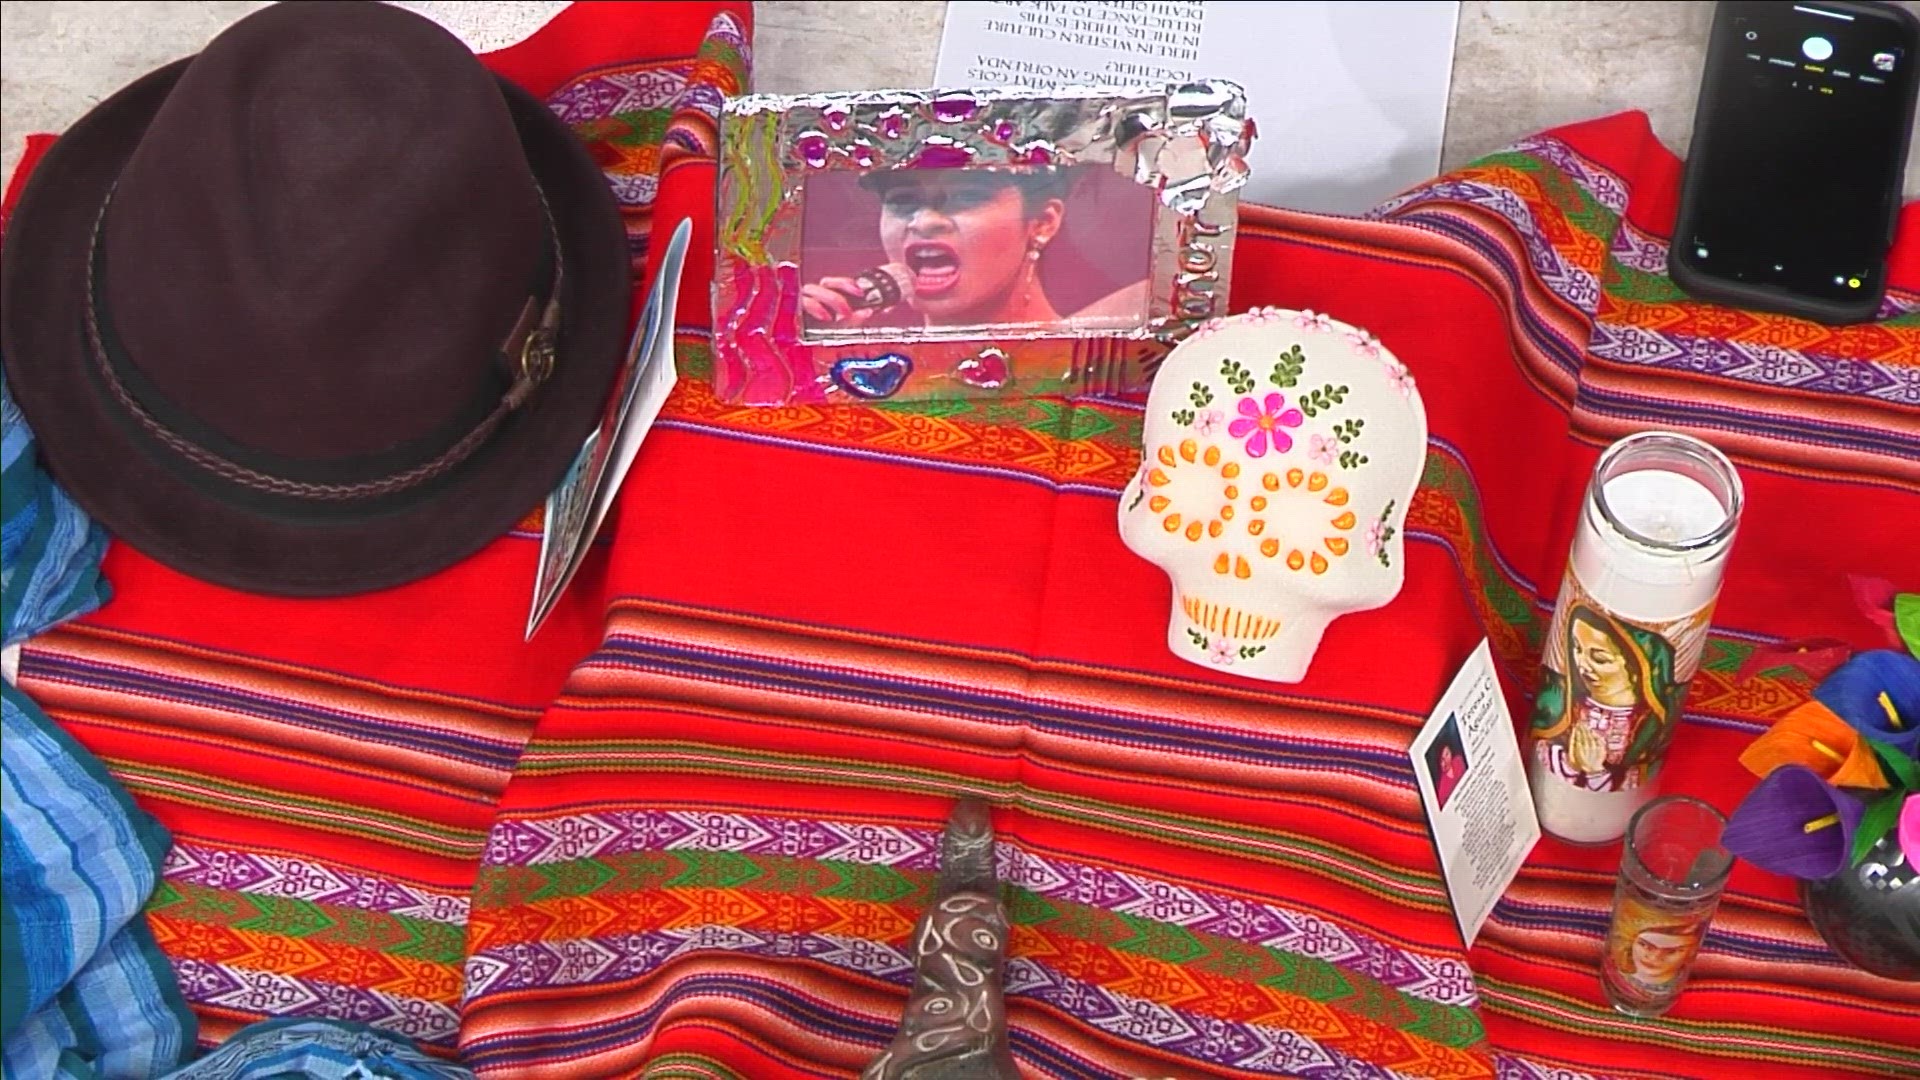 Mandy Medrano with the Latino Cultural Arts Center in Denver shows us how to make an ofrenda for Día de los Muertos.